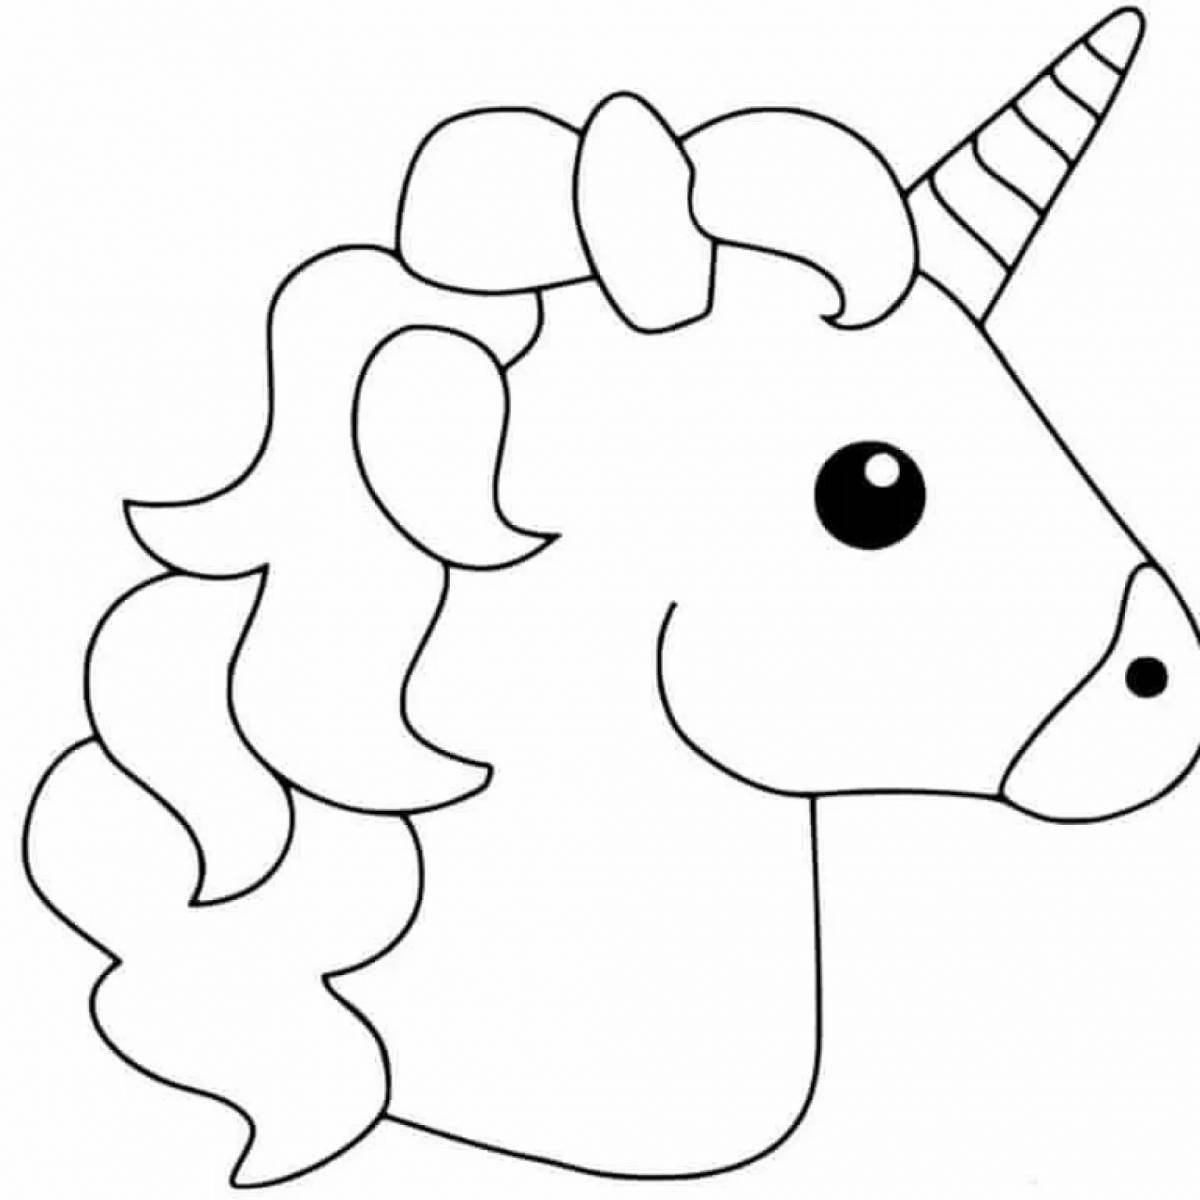 Divine unicorn coloring book for kids 3 4